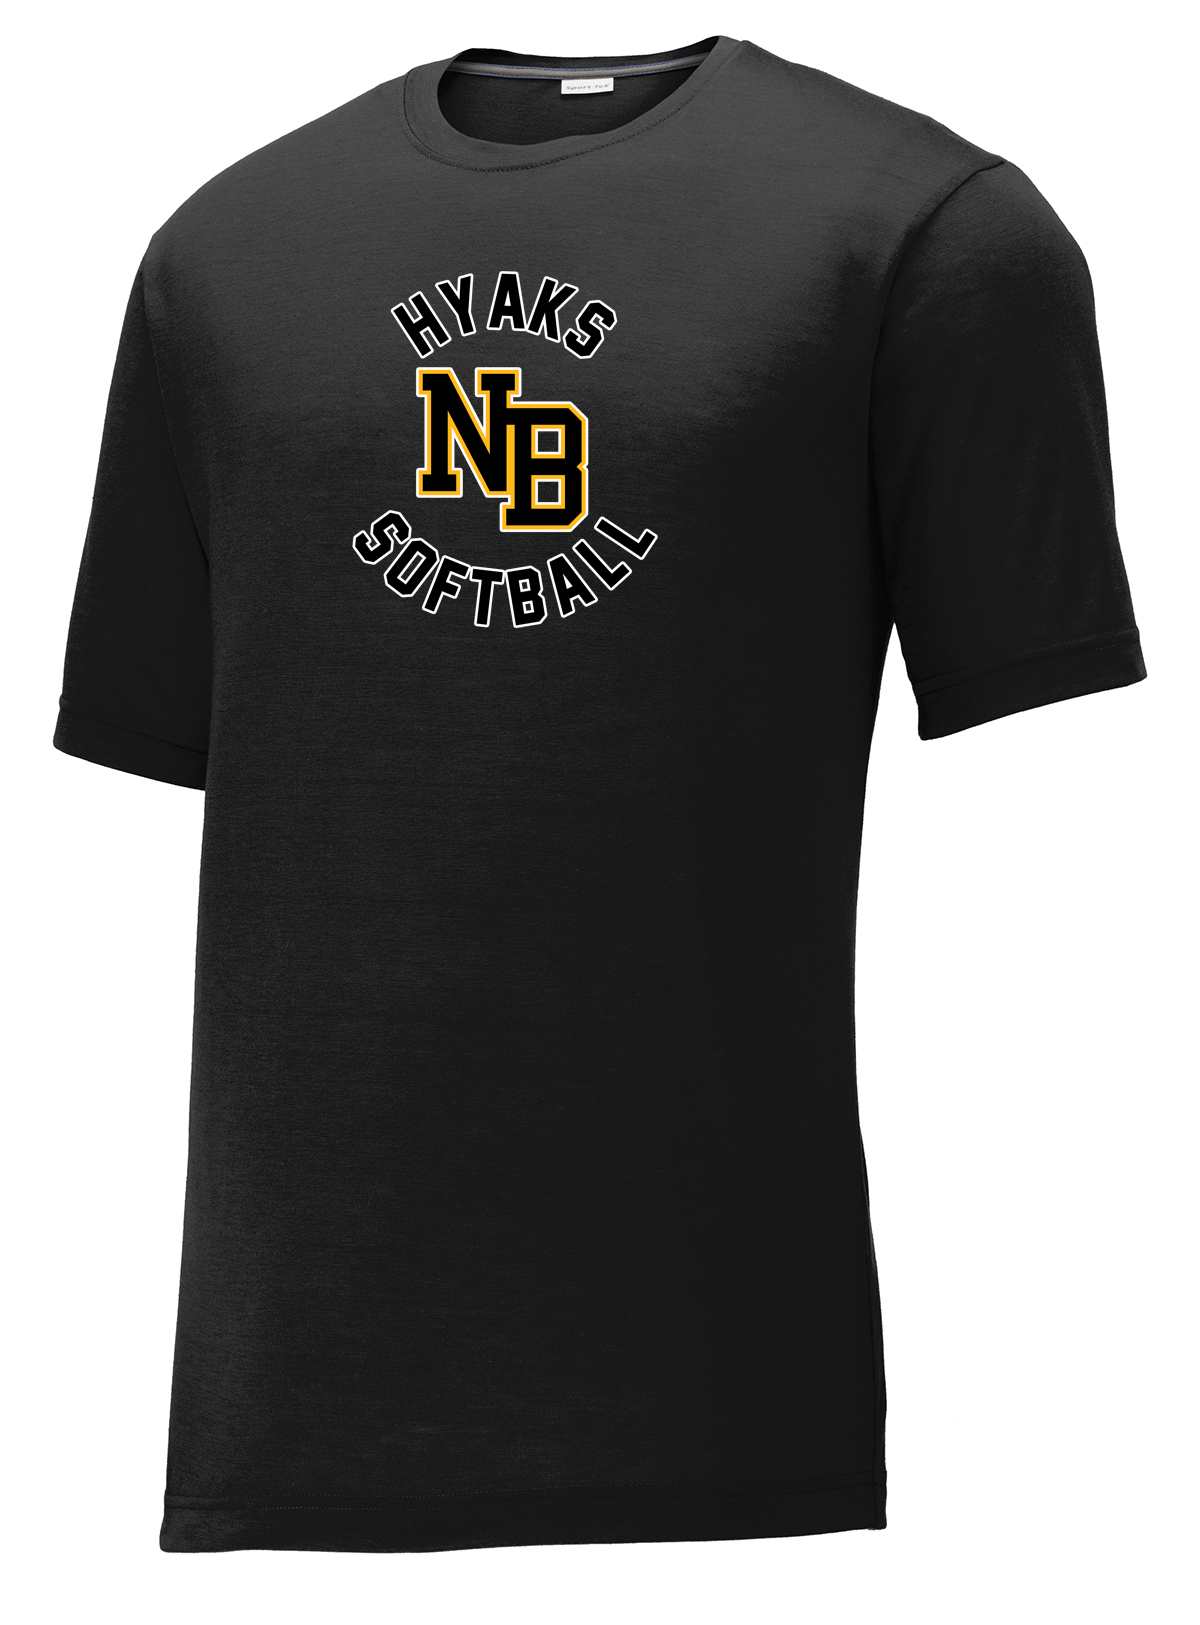 North Beach Softball CottonTouch Performance T-Shirt